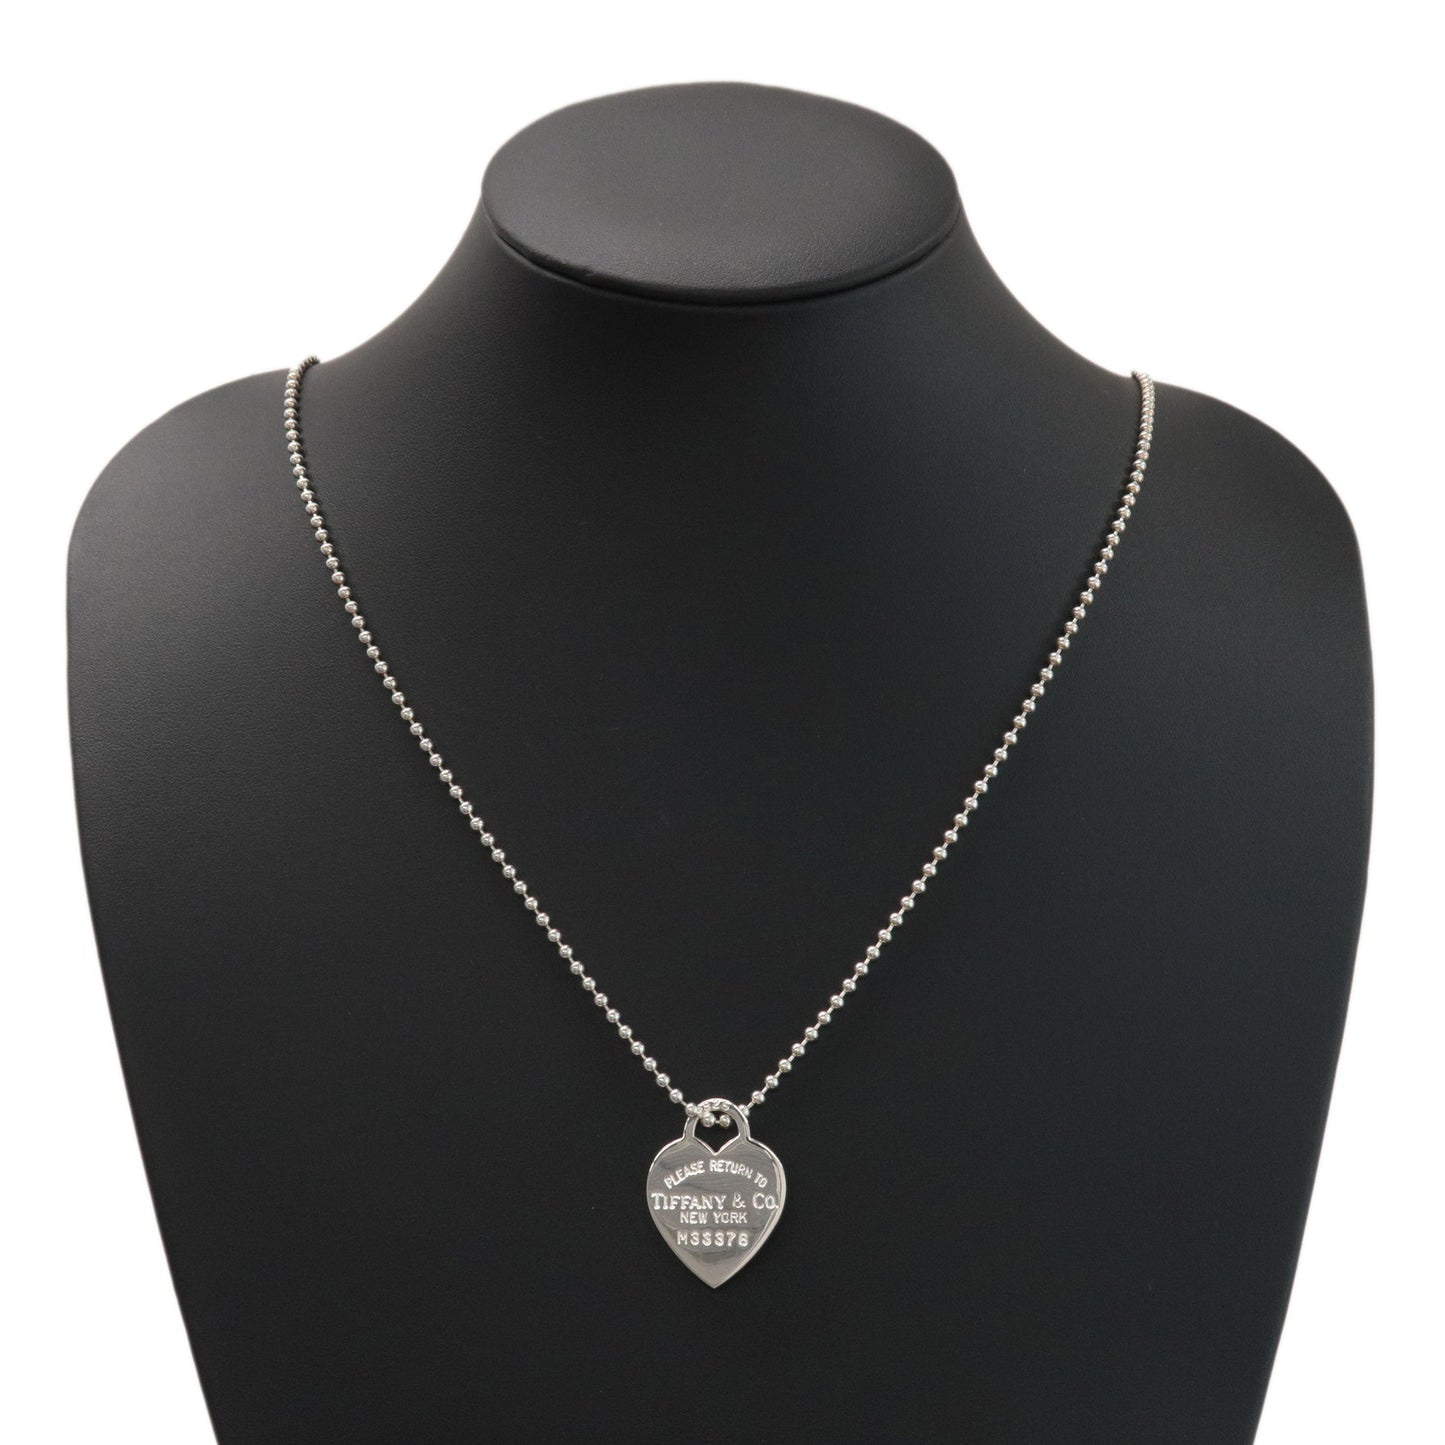 Tiffany&Co. Return to Tiffany Heart Tag Necklace SV925 Silver